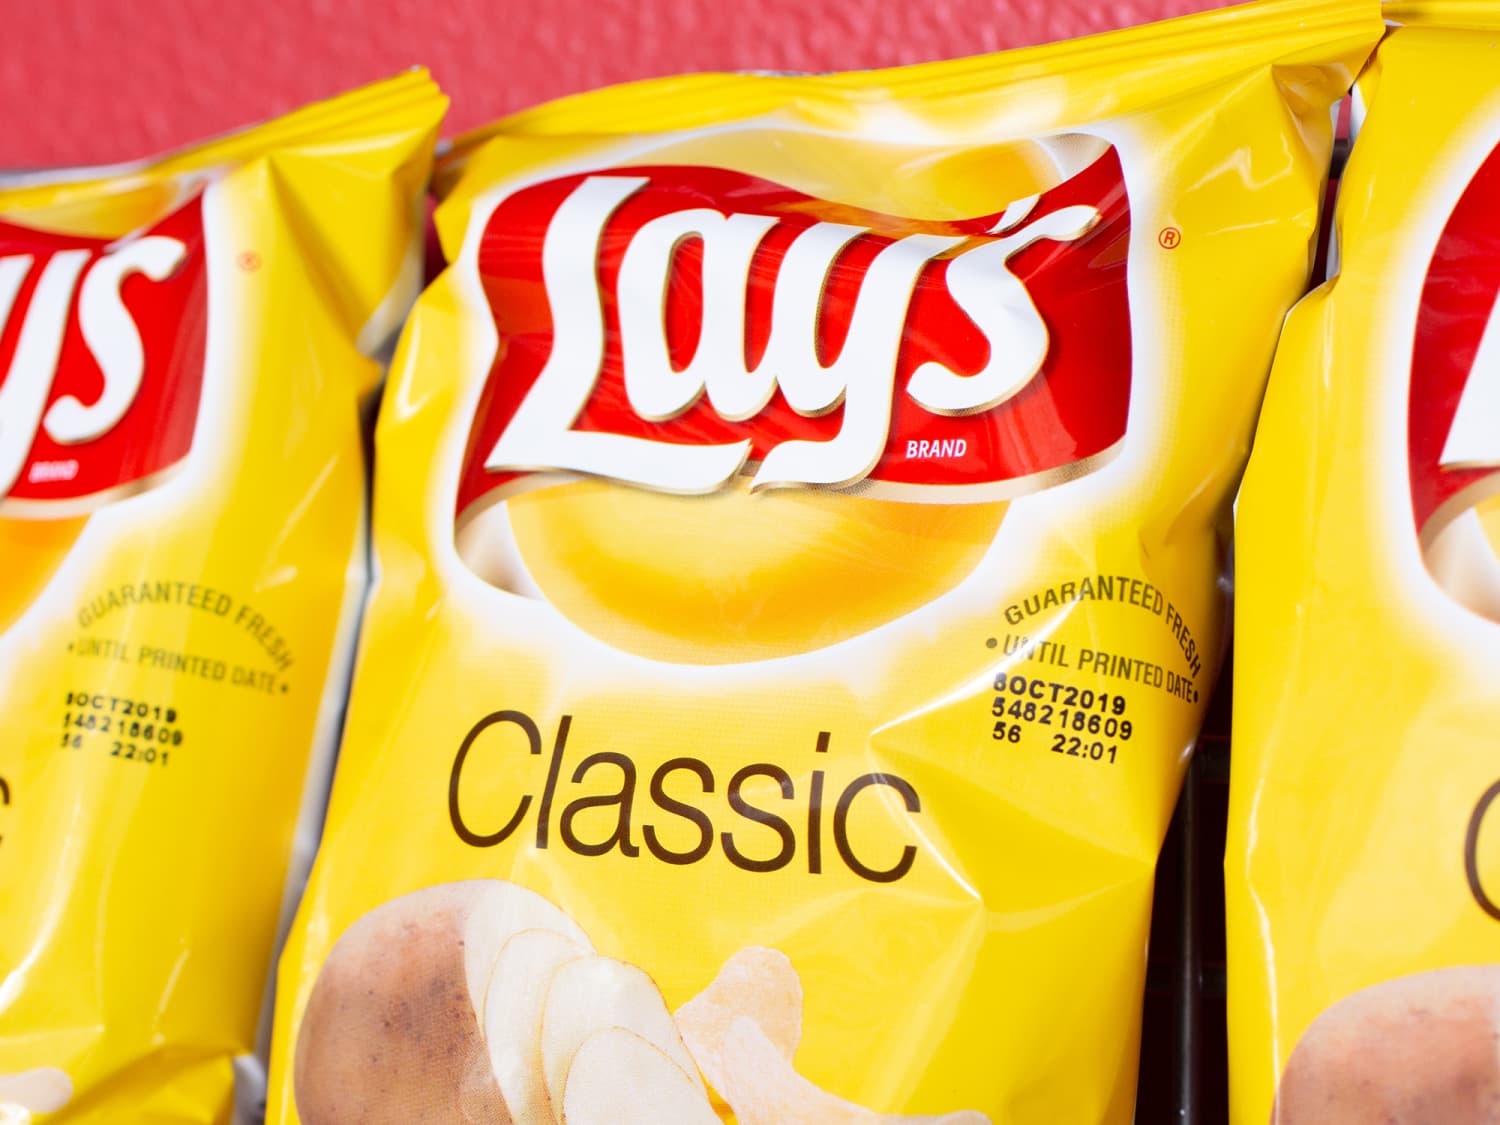 Lay's Classic Potato Chips